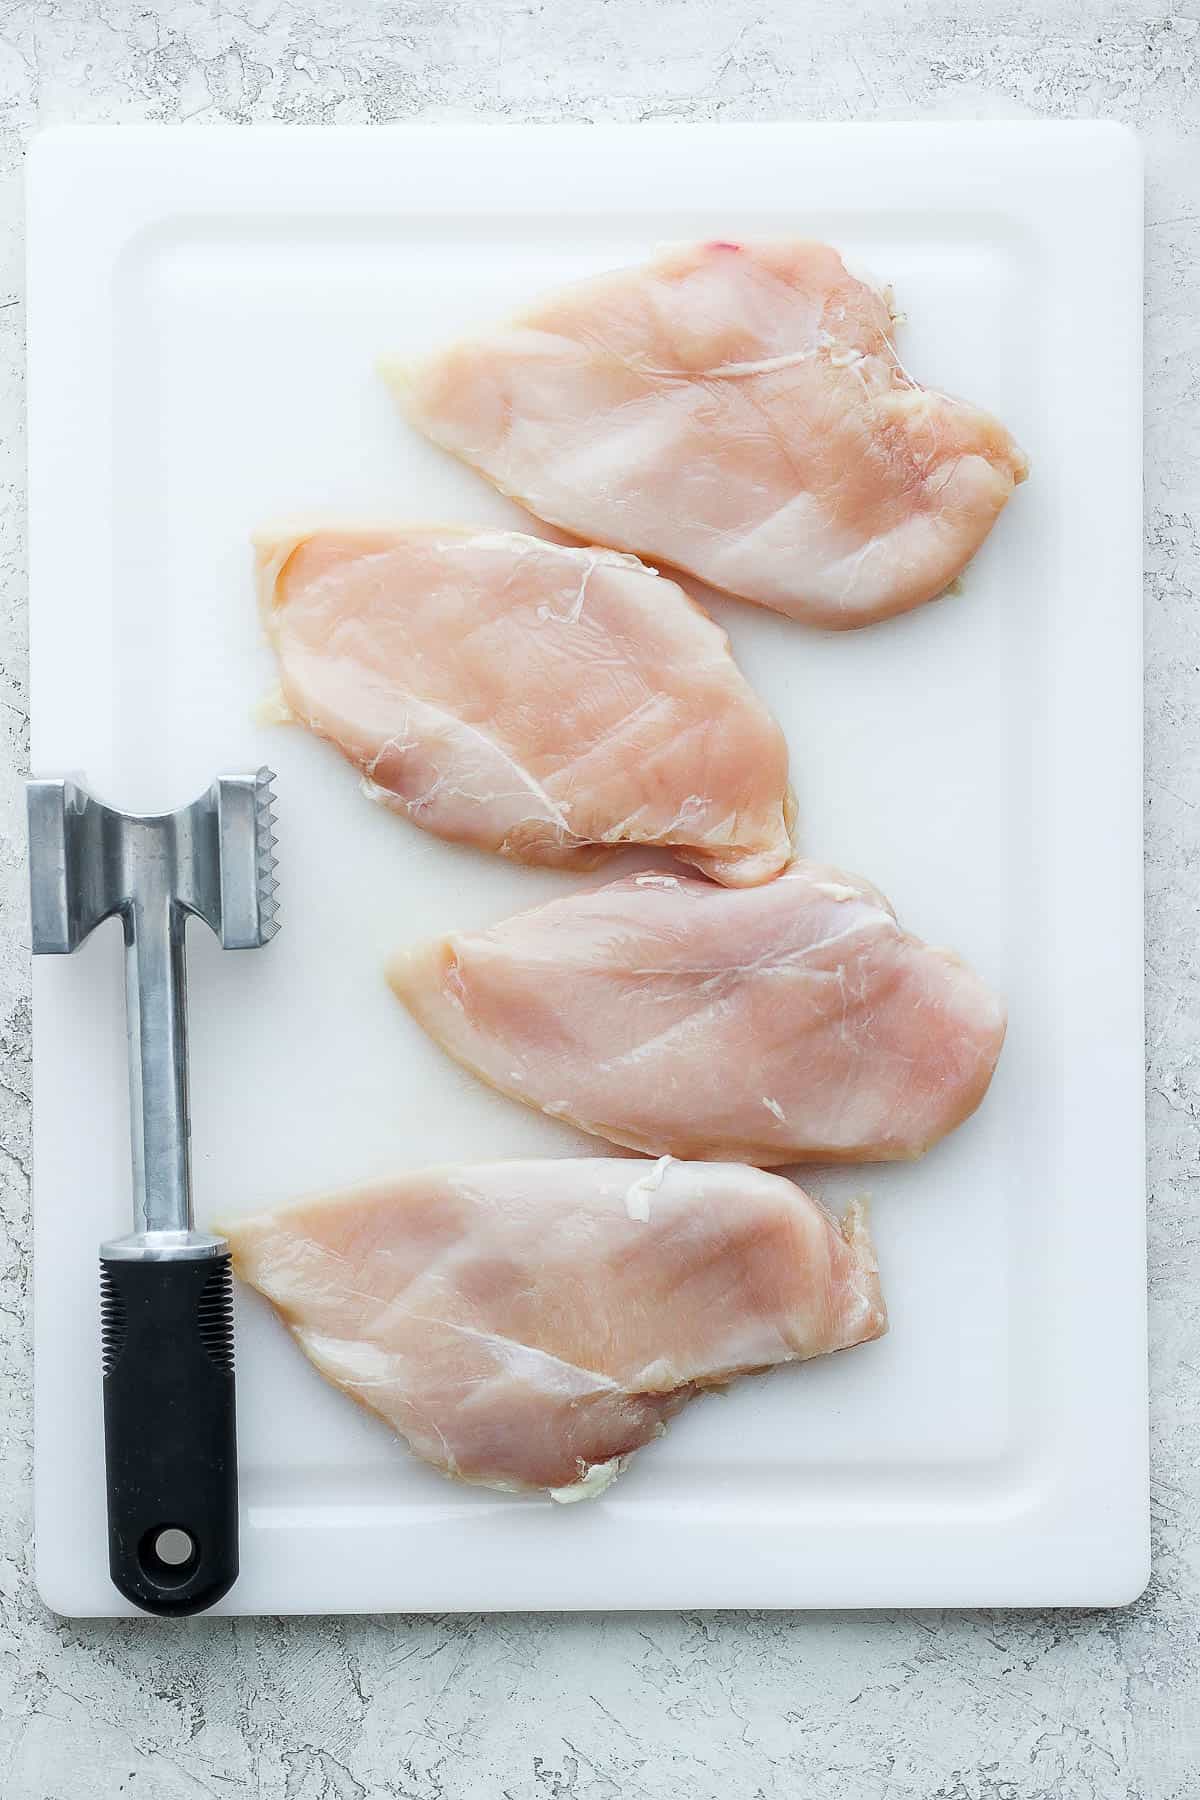 preparing chicken by using a mallet to pound it